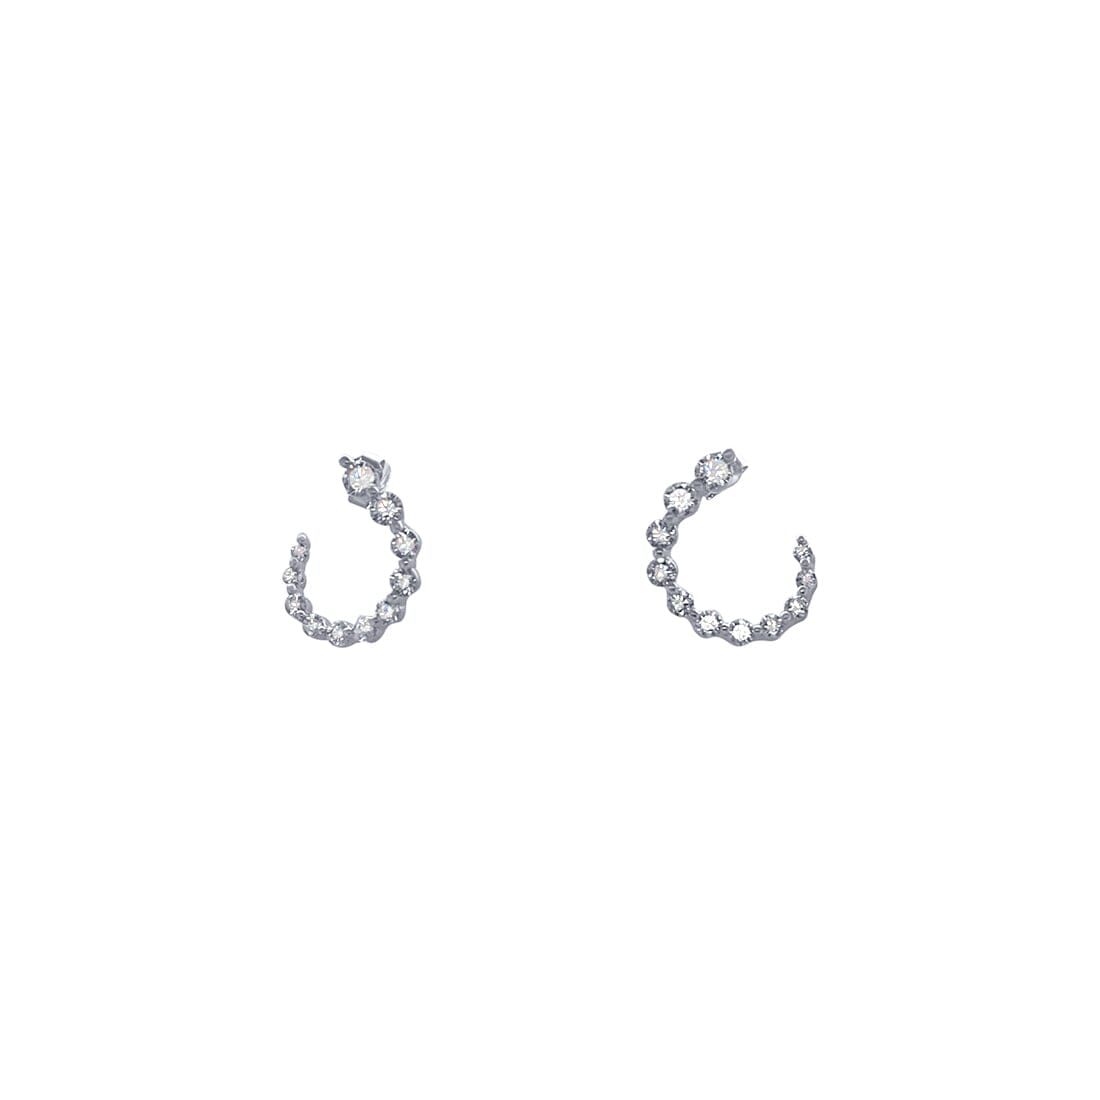 19mm Open Circle Stud Earrings with Cubic Zirconia in Sterling Silver Earrings Bevilles 